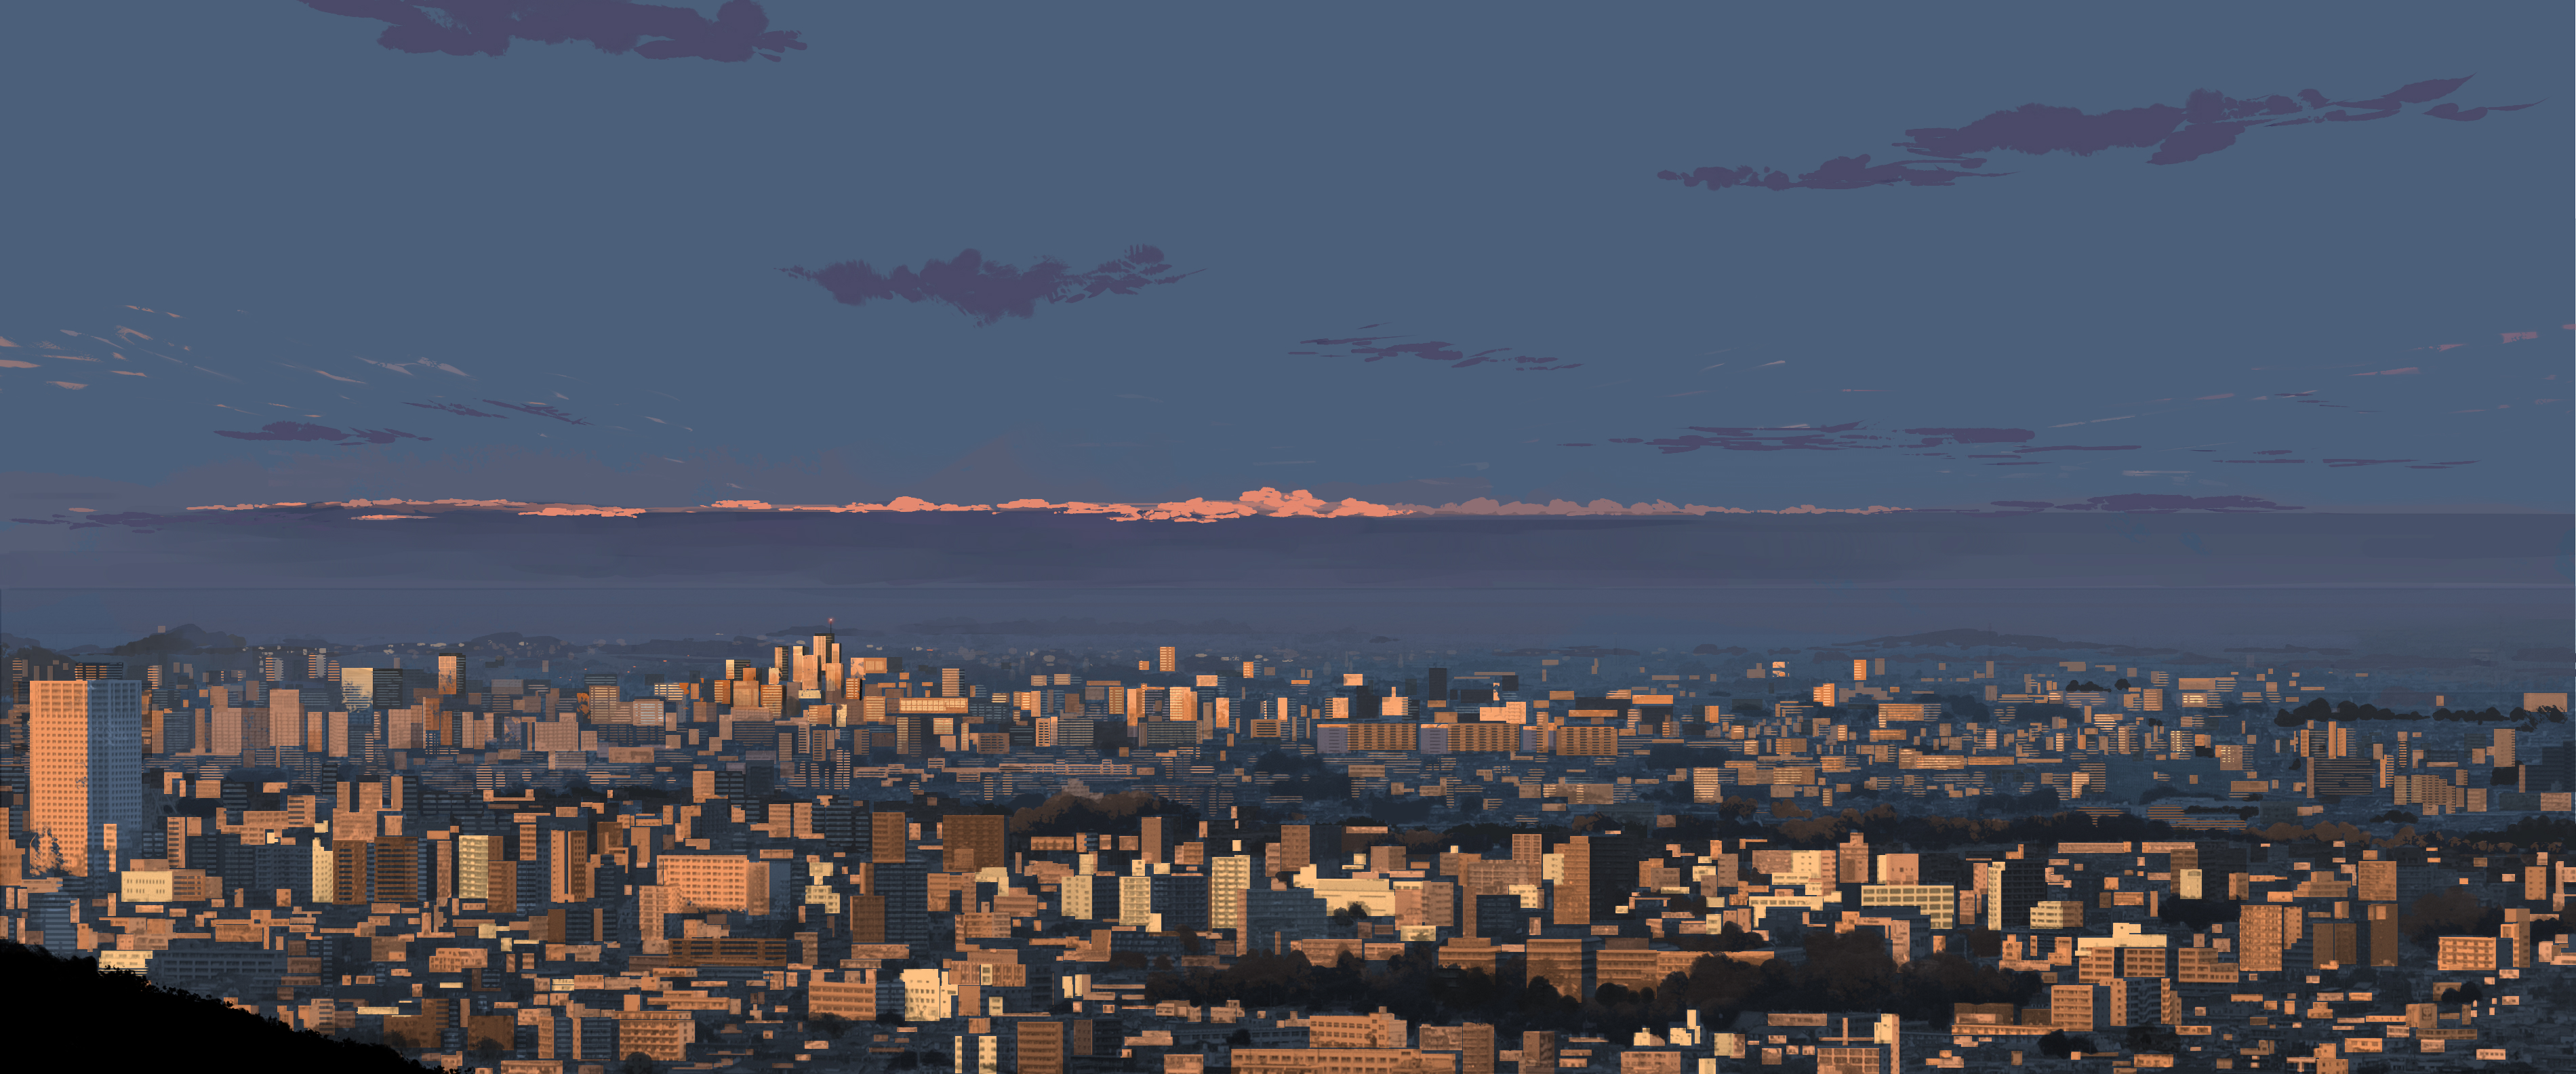 General 3800x1584 digital art artwork illustration city cityscape building sky clouds sunlight